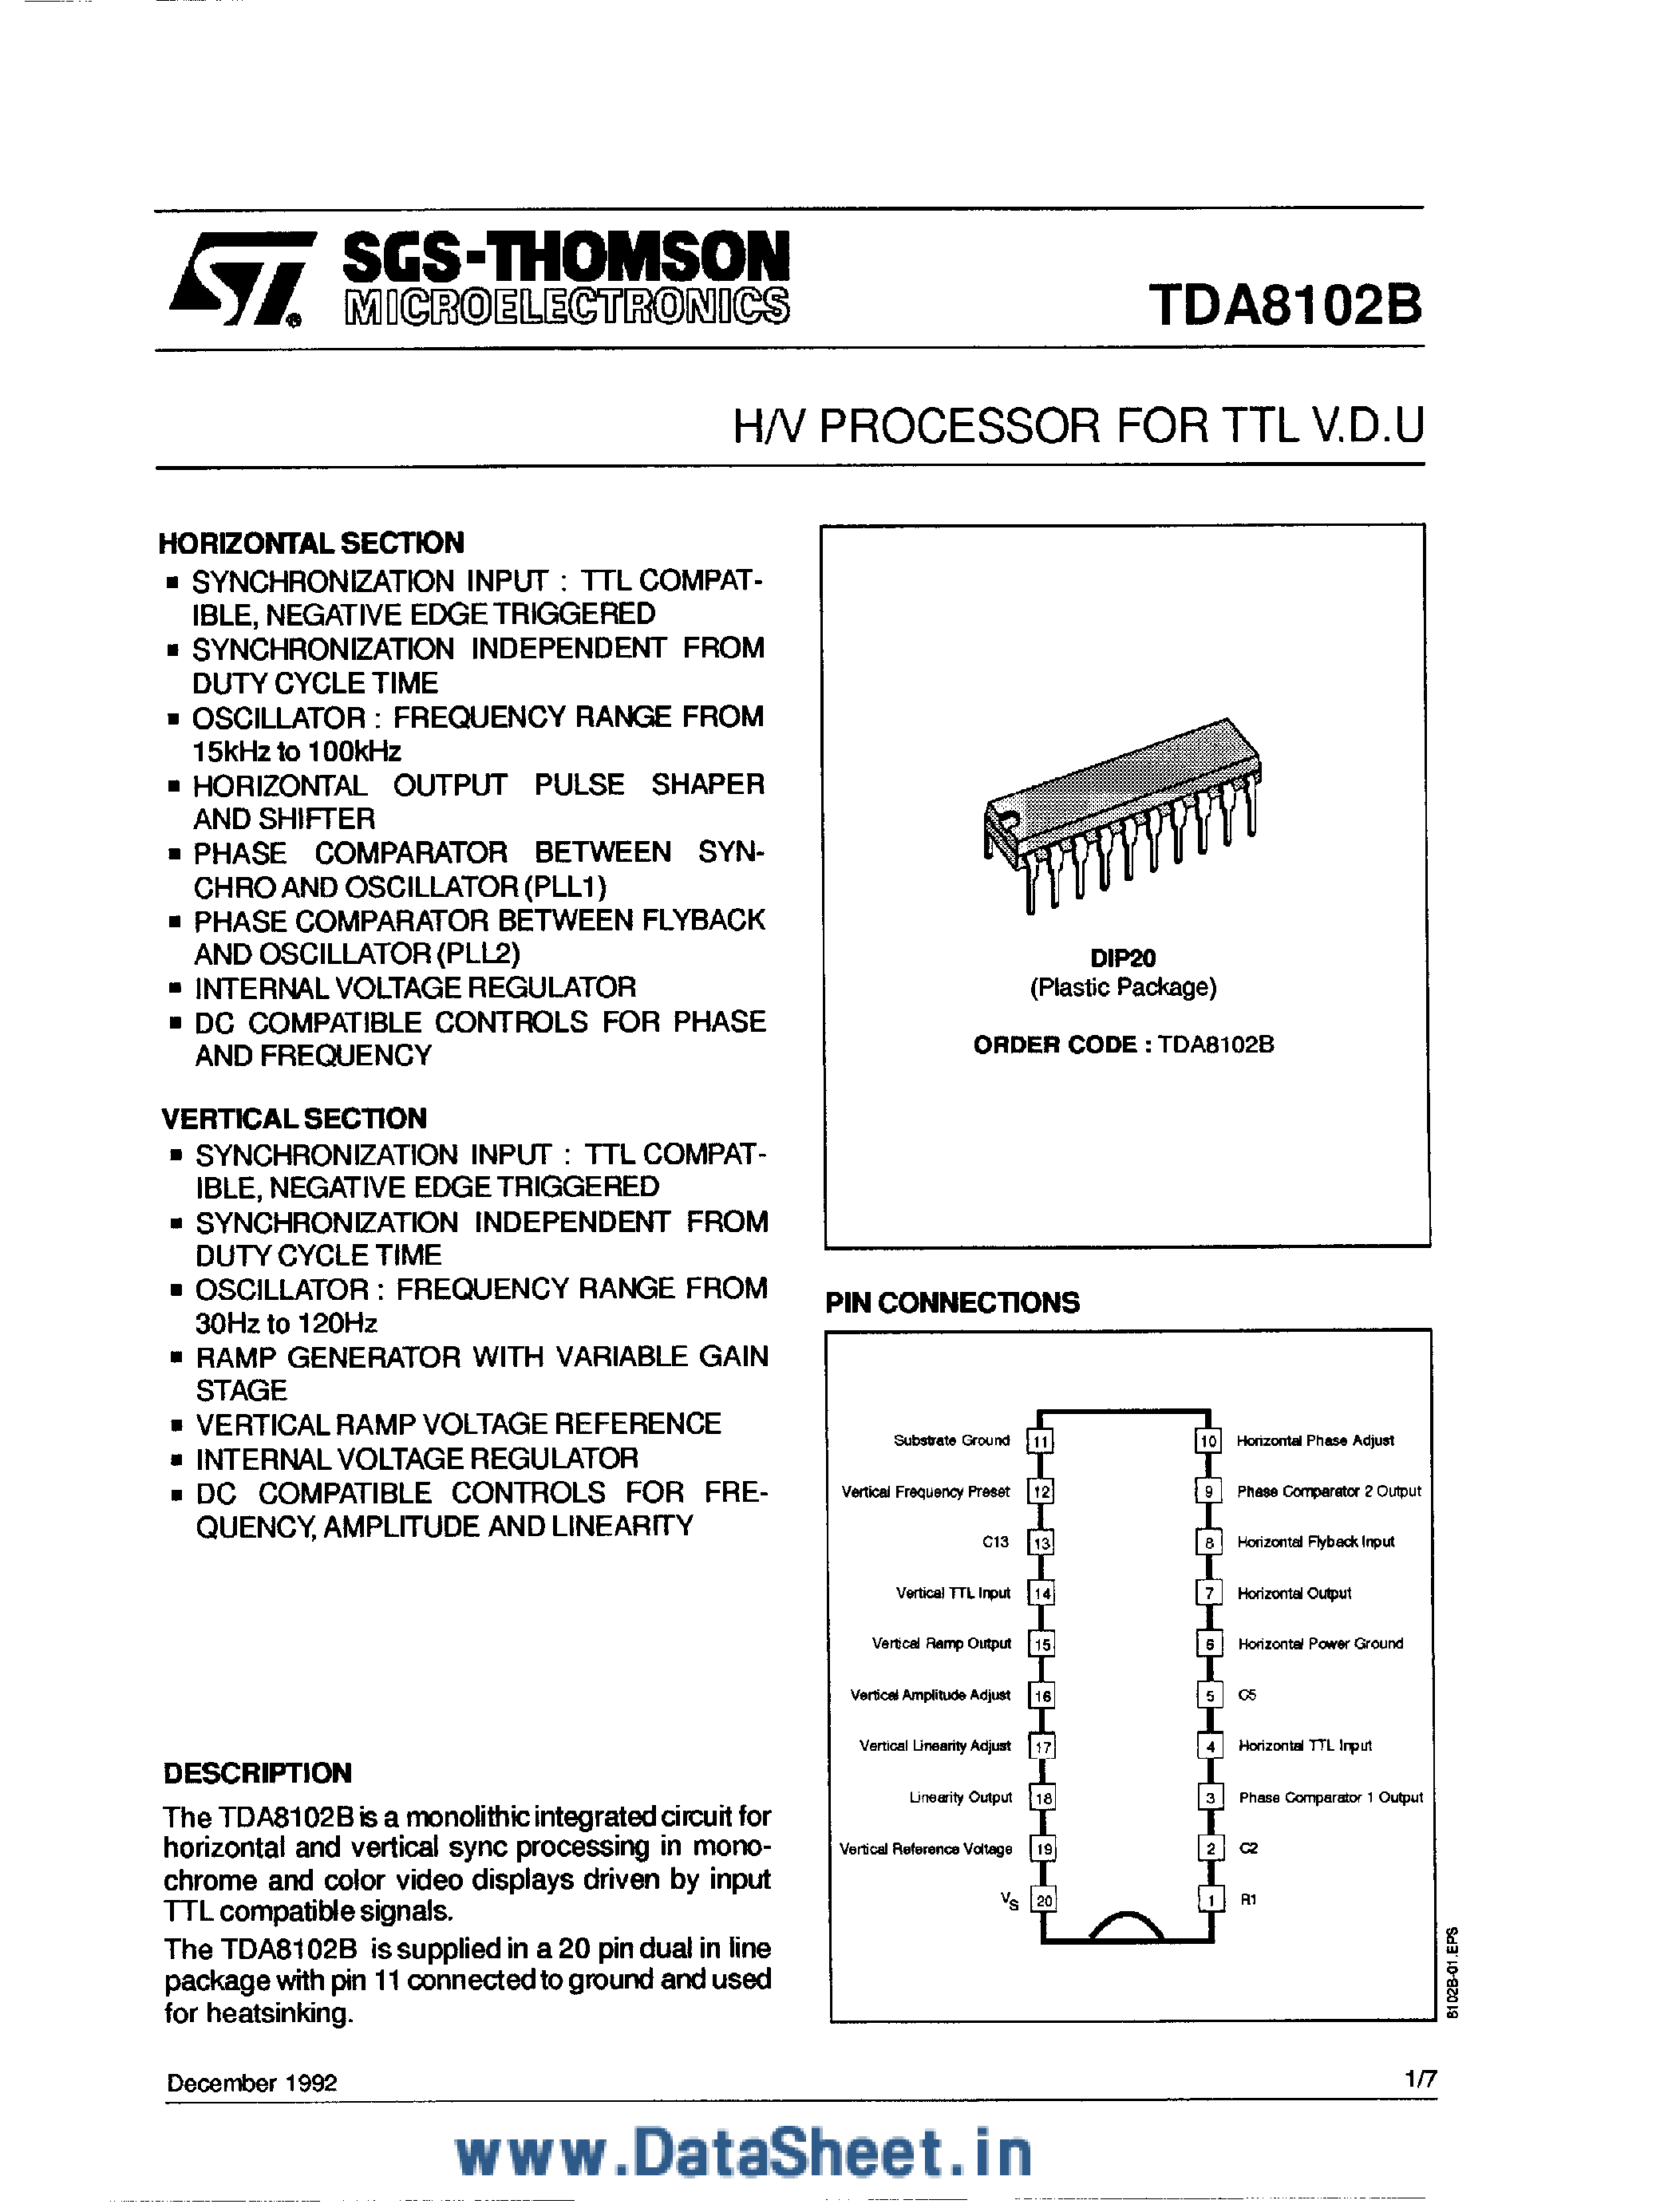 Даташит TDA8102B - H/V Processor for TTL VDU страница 1